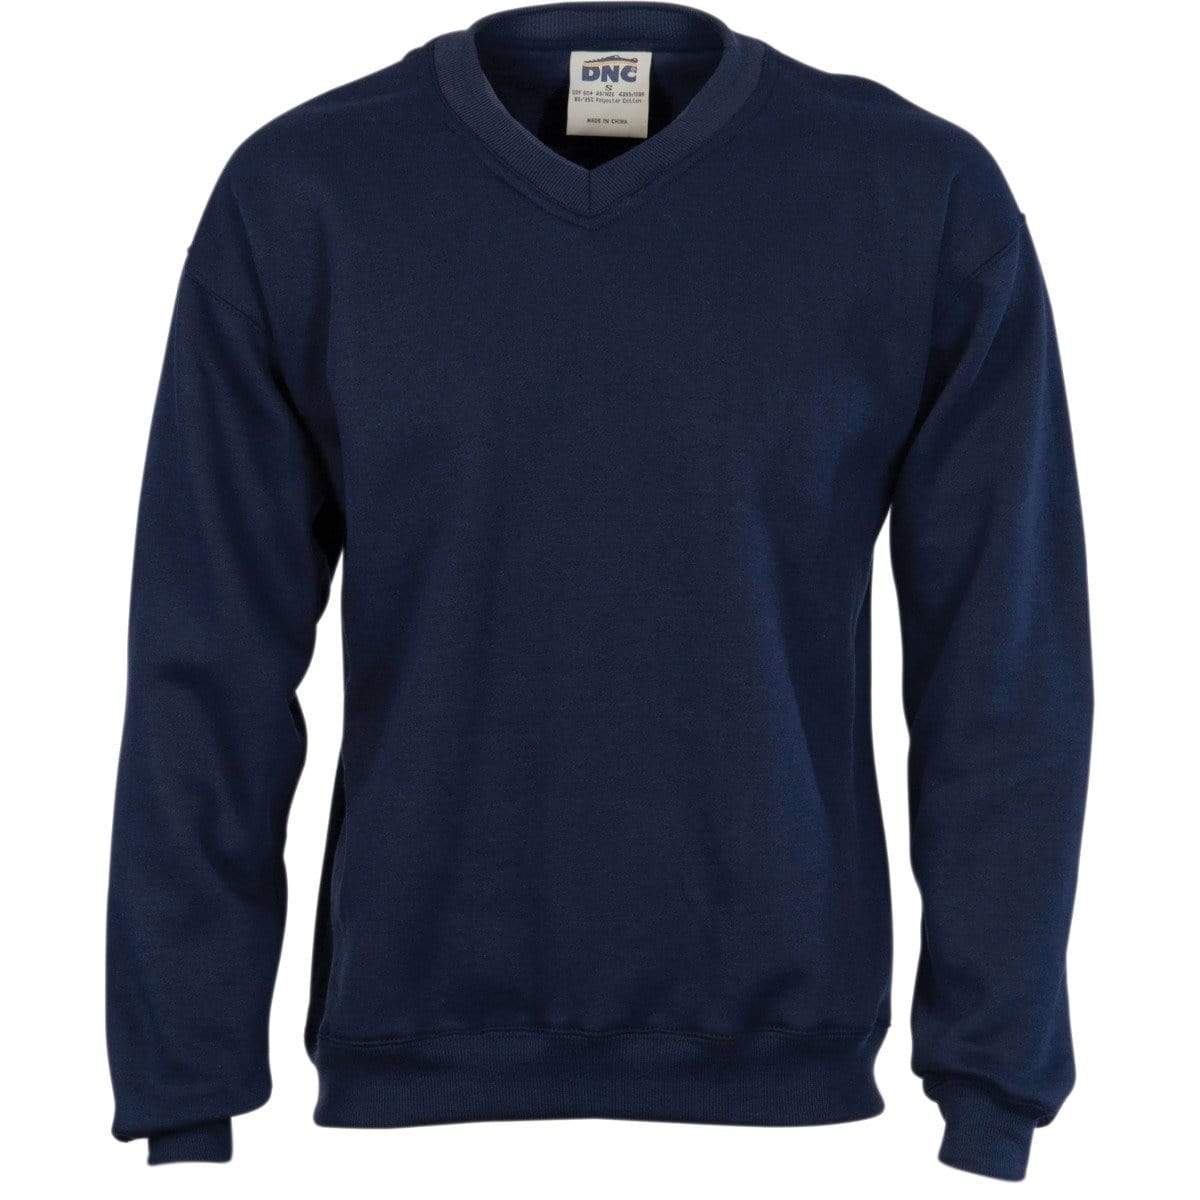 DNC Workwear Corporate Wear DNC WORKWEAR V-Neck Fleecy Sweatshirt (Sloppy Joe) 5301